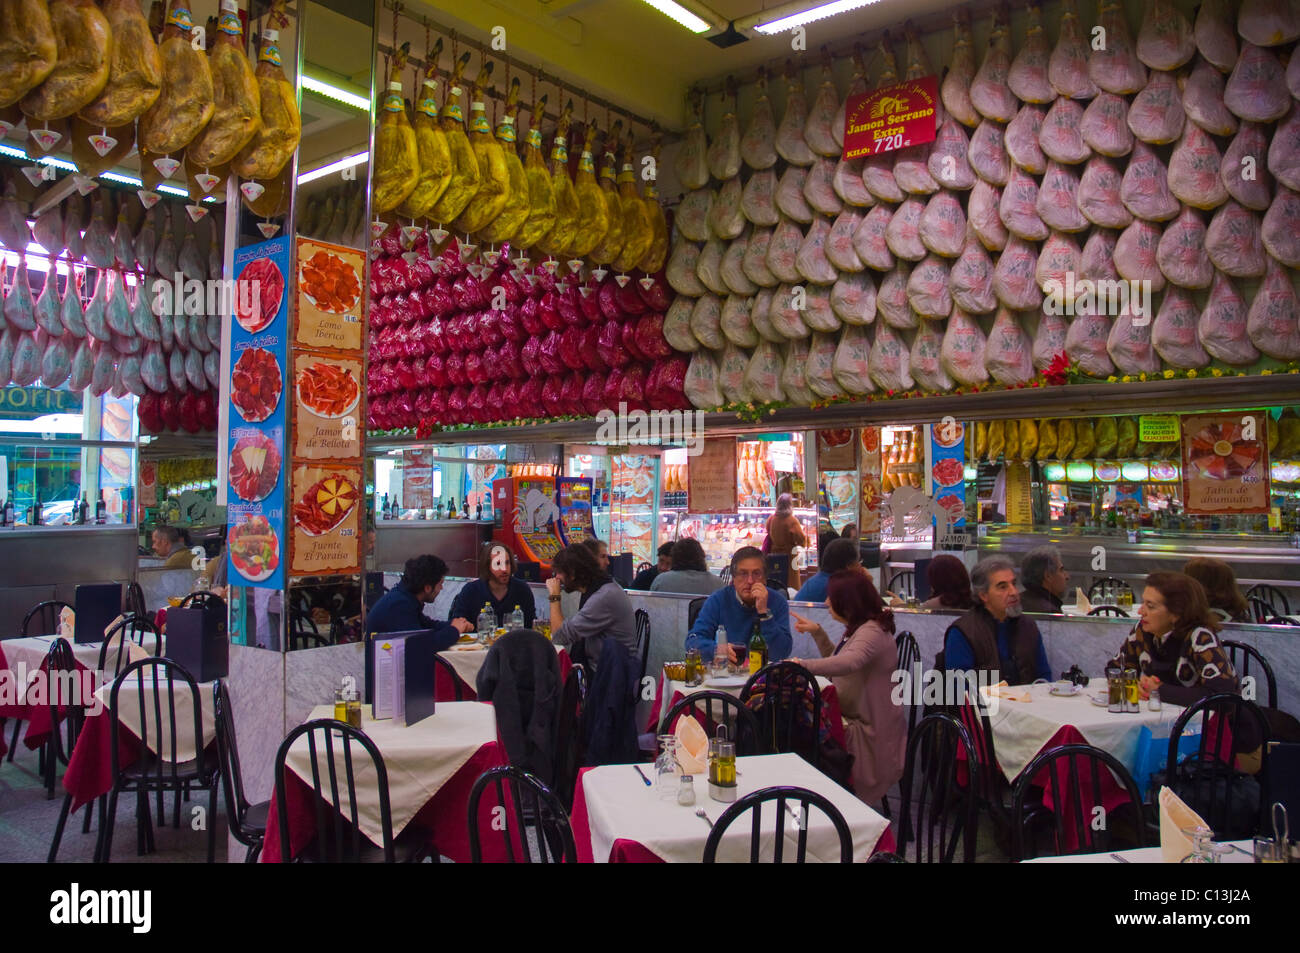 Paraiso del Jamon cafe restaurant along Calle del Arenal street central Madrid Spain Europe Stock Photo